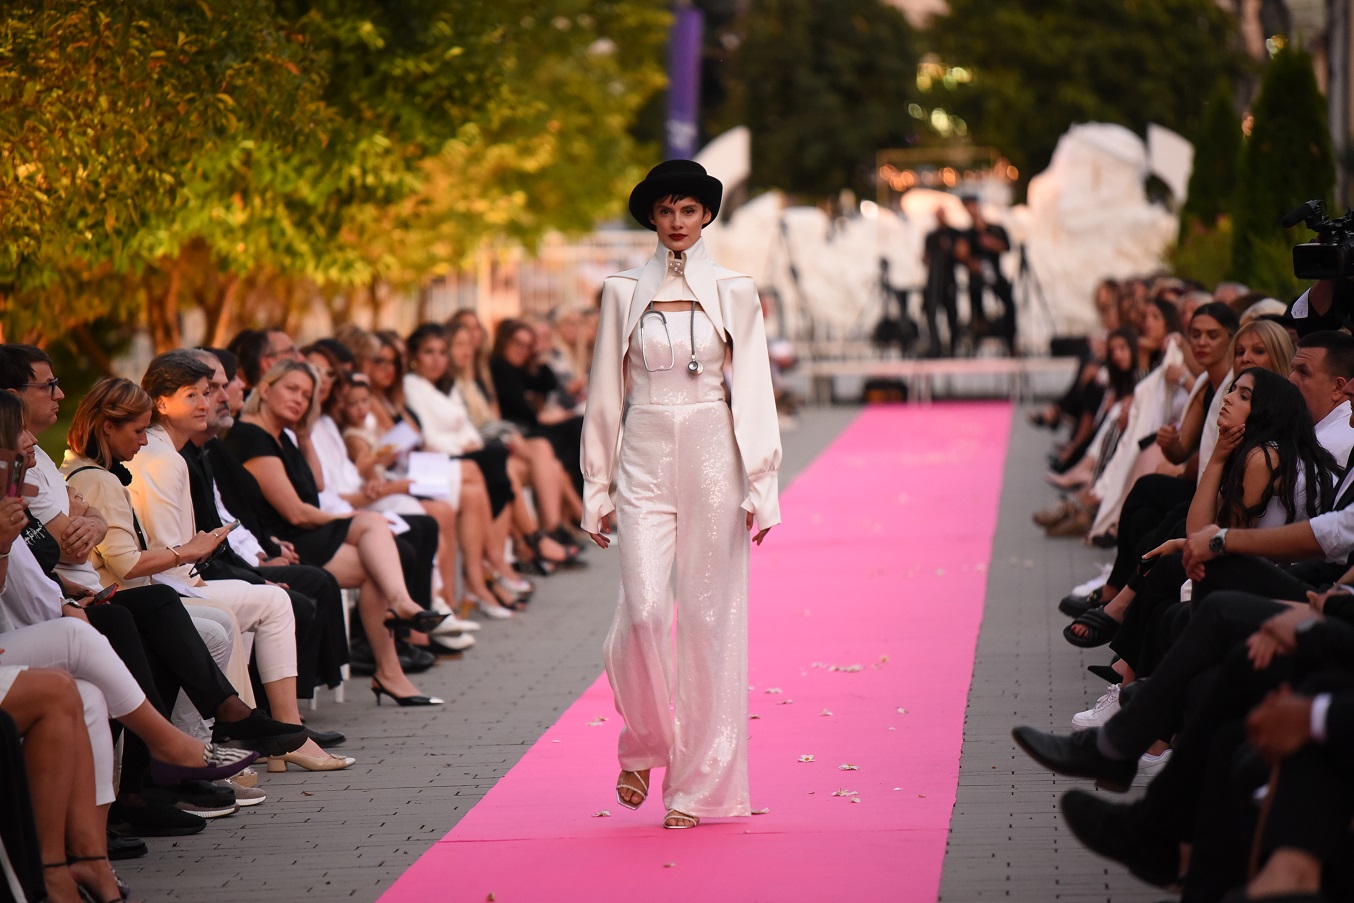 Održana ekskluzivna modna revija PS Fashion brenda u Čačku (FOTO+VIDEO)